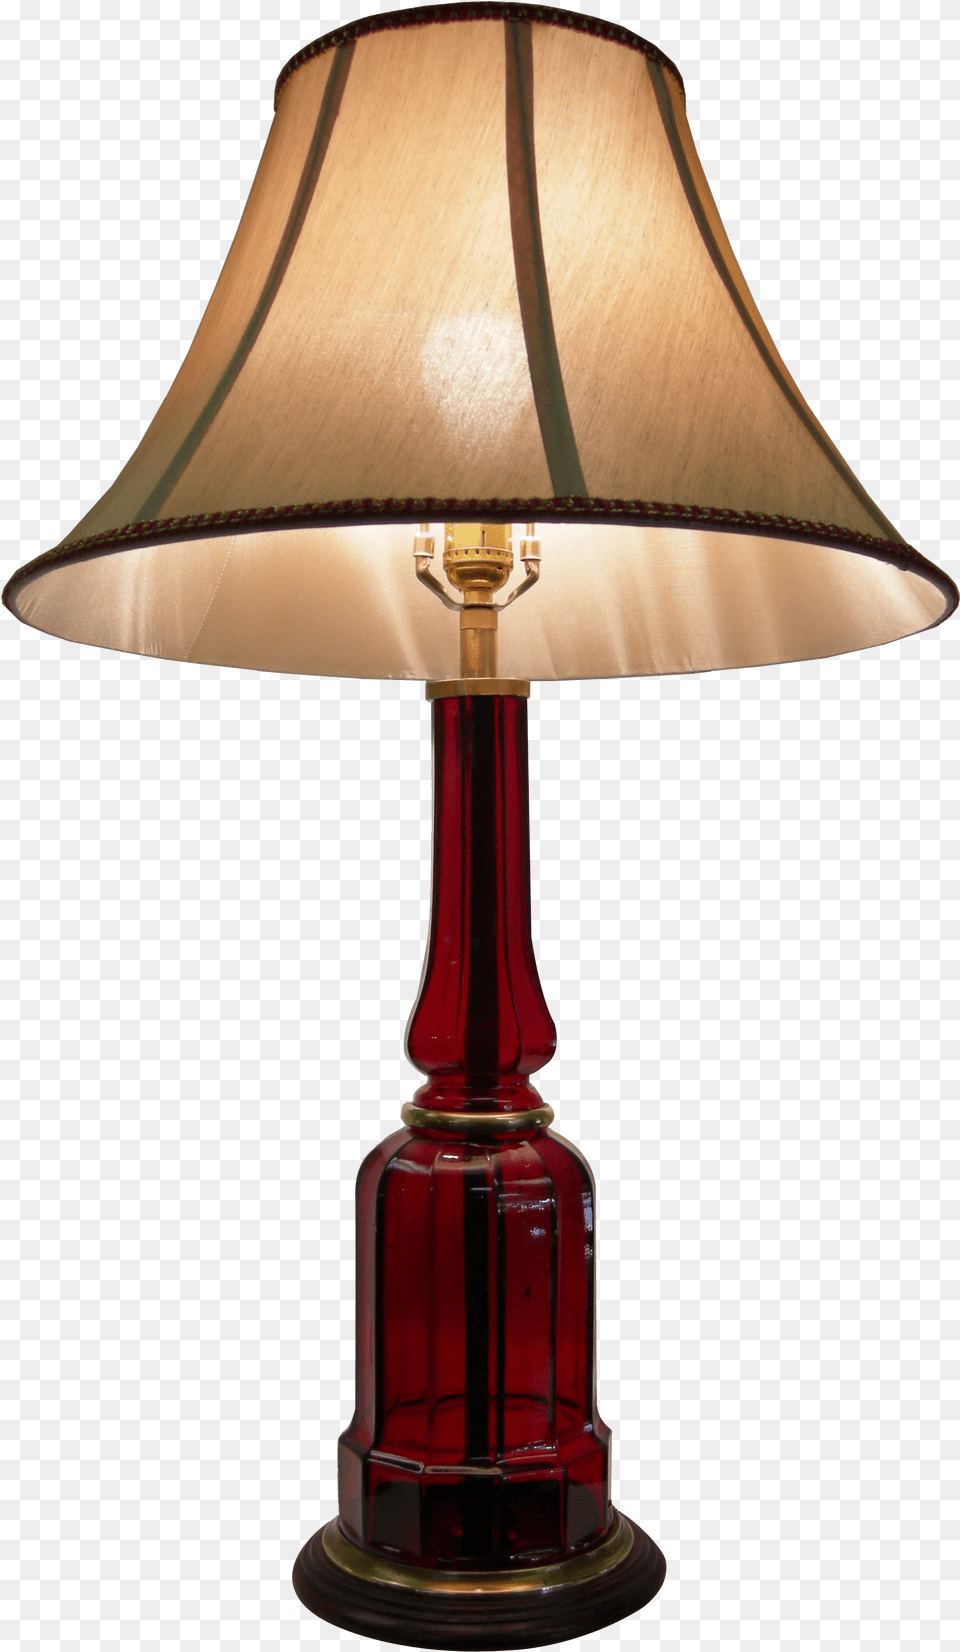 Lamp, Lampshade, Table Lamp Png Image